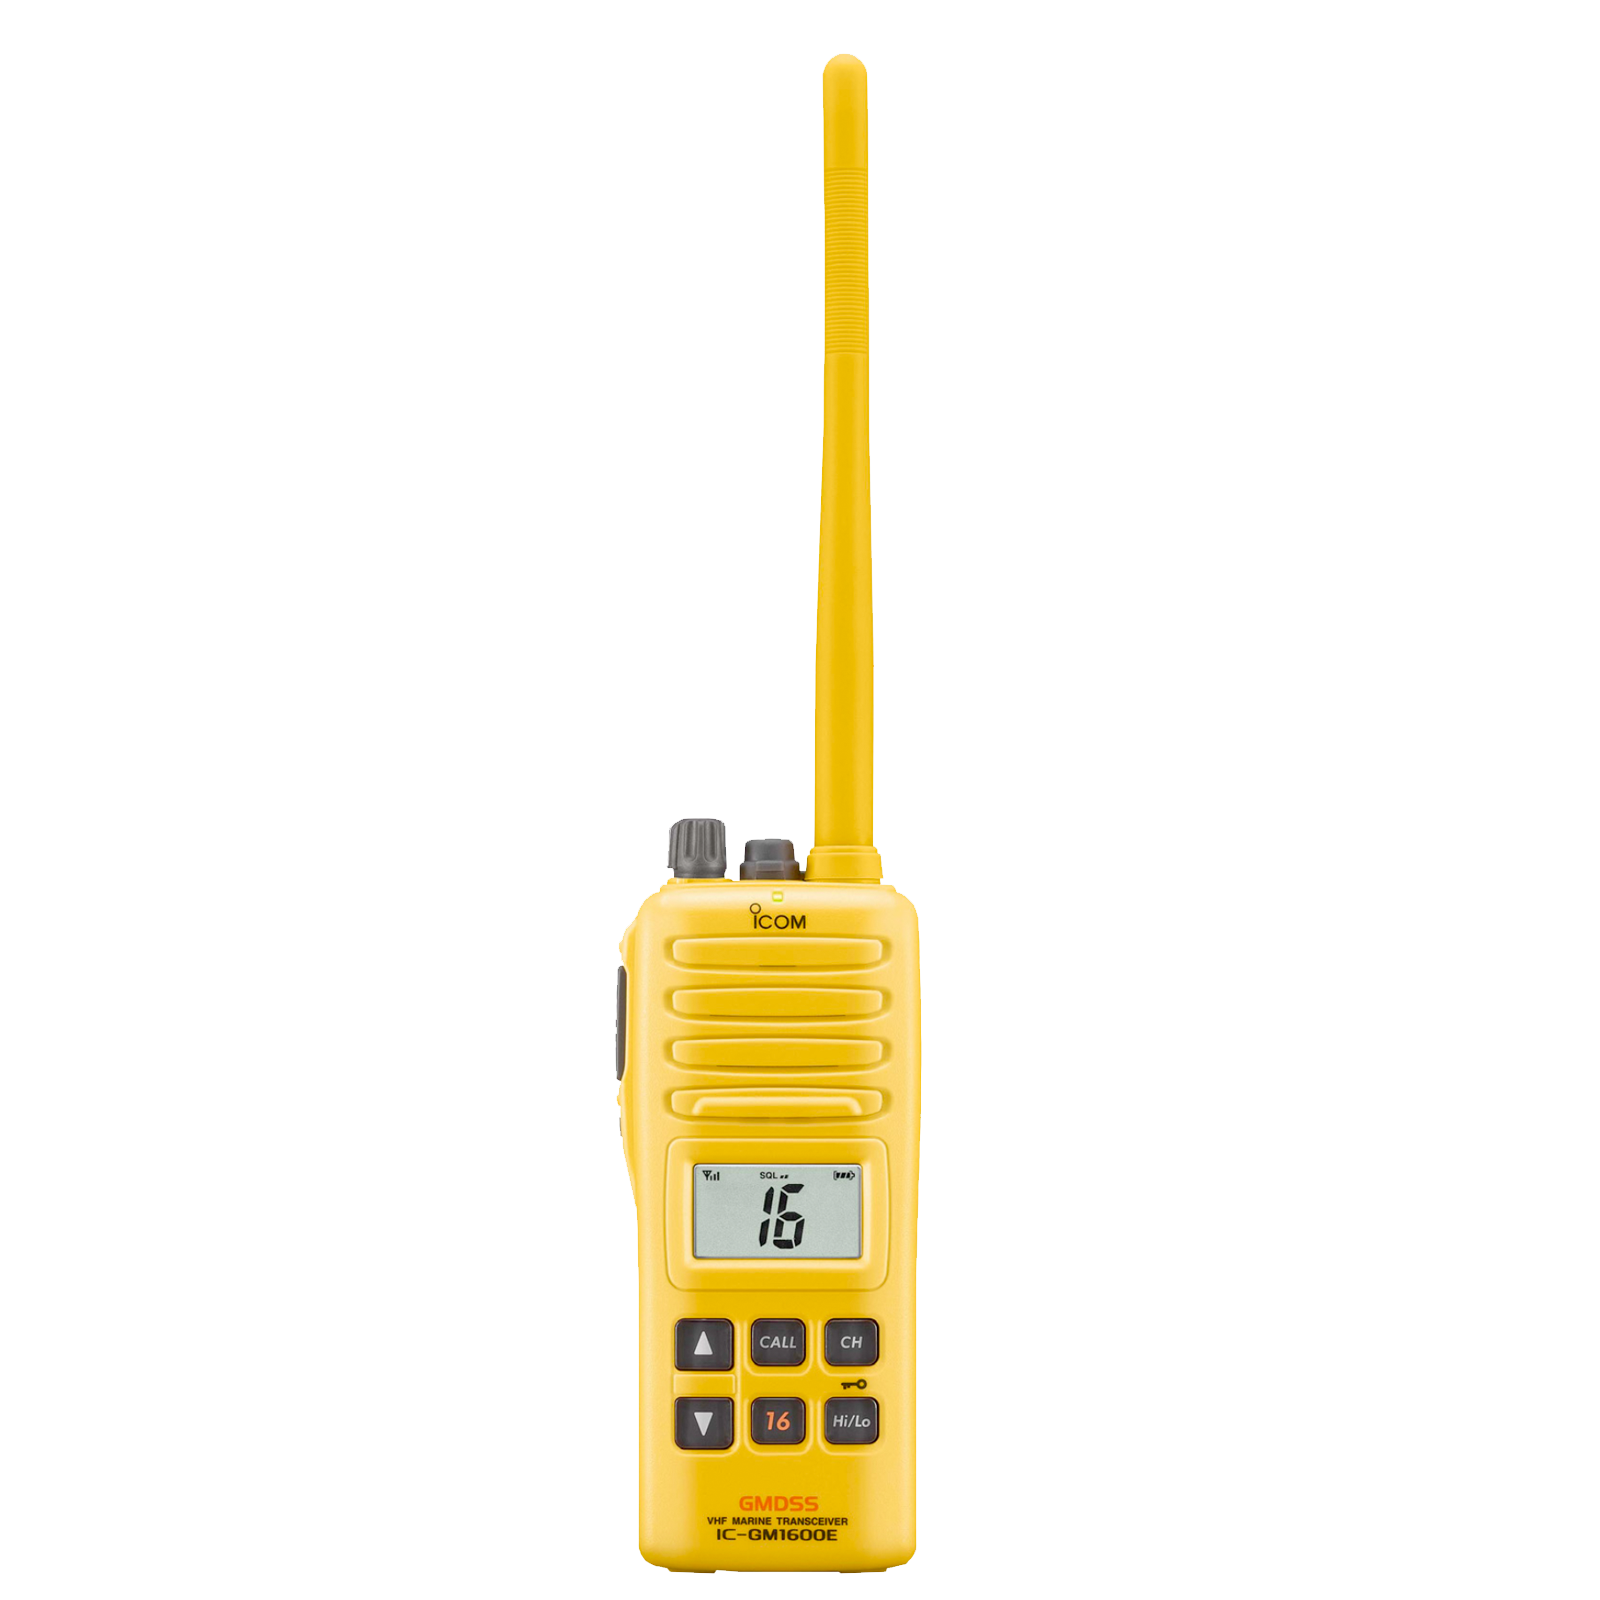 Telestar System Telecomunicazioni Roma Radio GMDSS ICOM IC-GM1600E